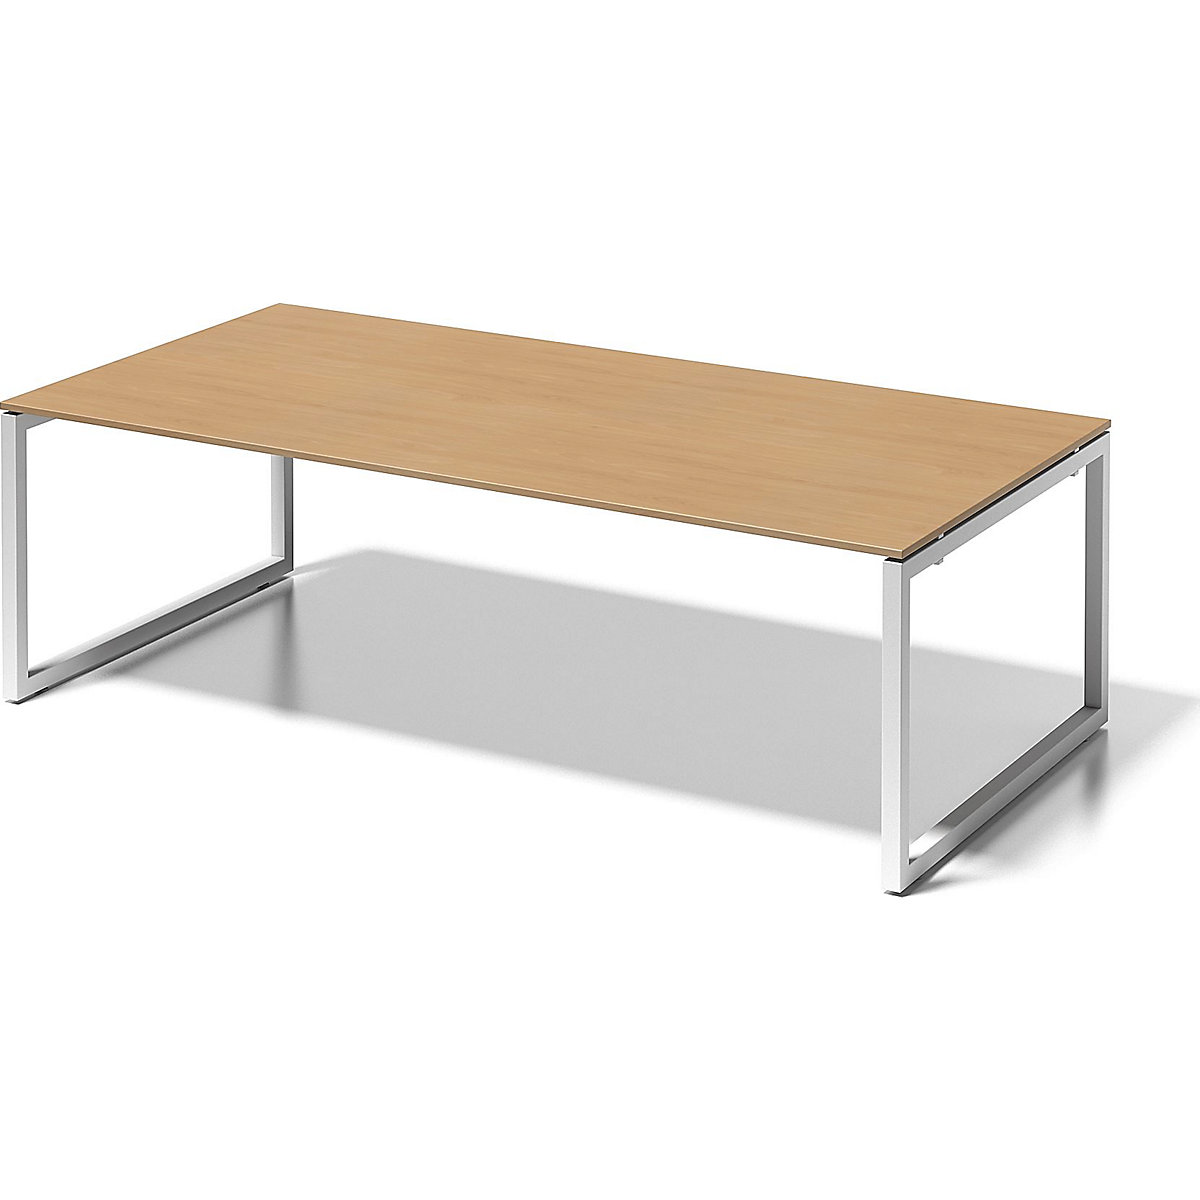 CITO desk, O-frame – BISLEY, HxWxD 740 x 2400 x 1200 mm, white frame, beech tabletop-8